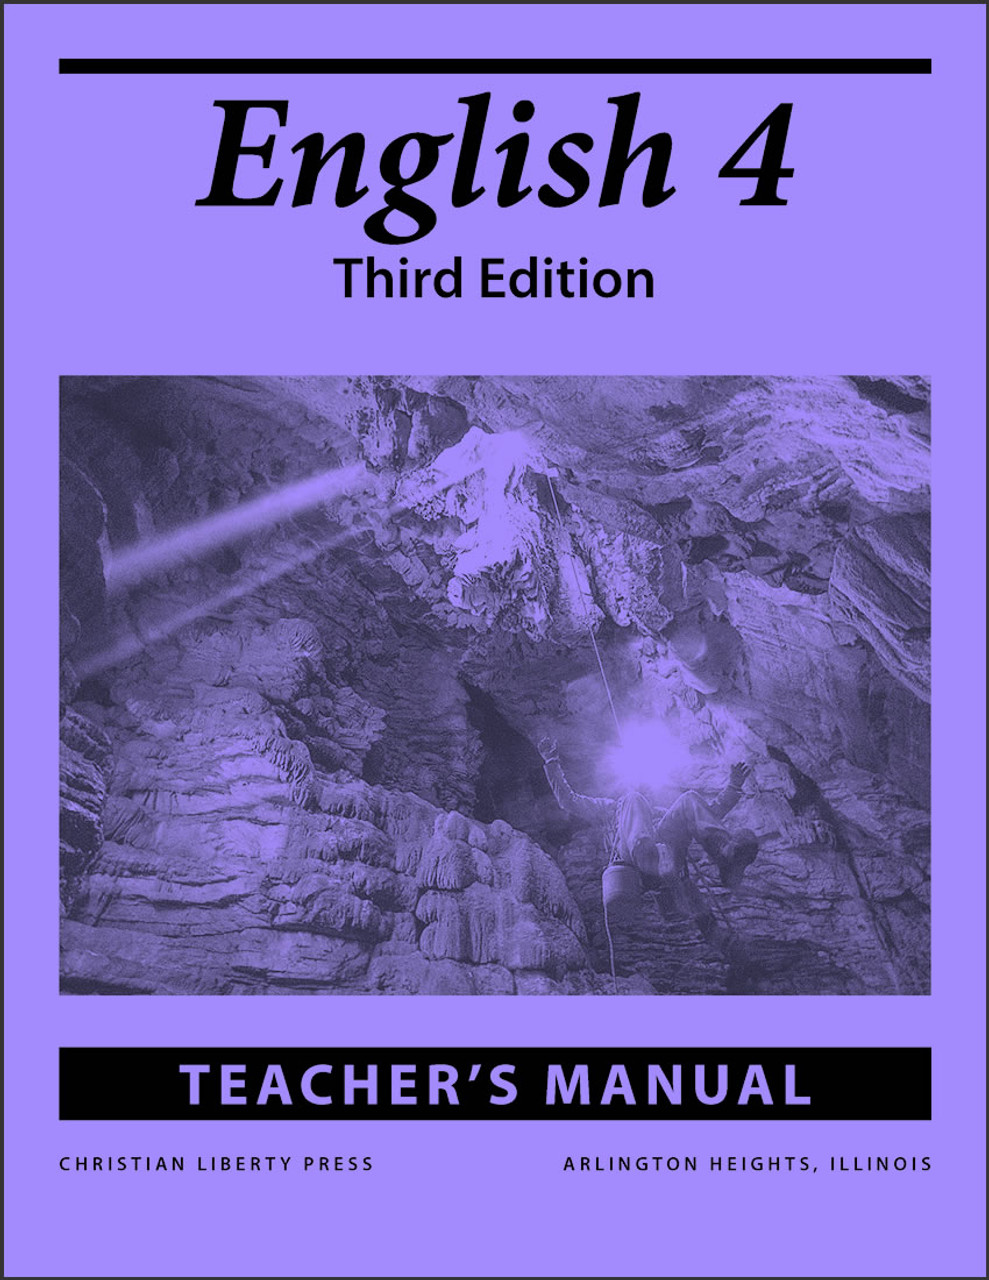 edition　Writing　English　Christian　Grammar,　4:　Teacher's　Manual　and　3rd　Liberty